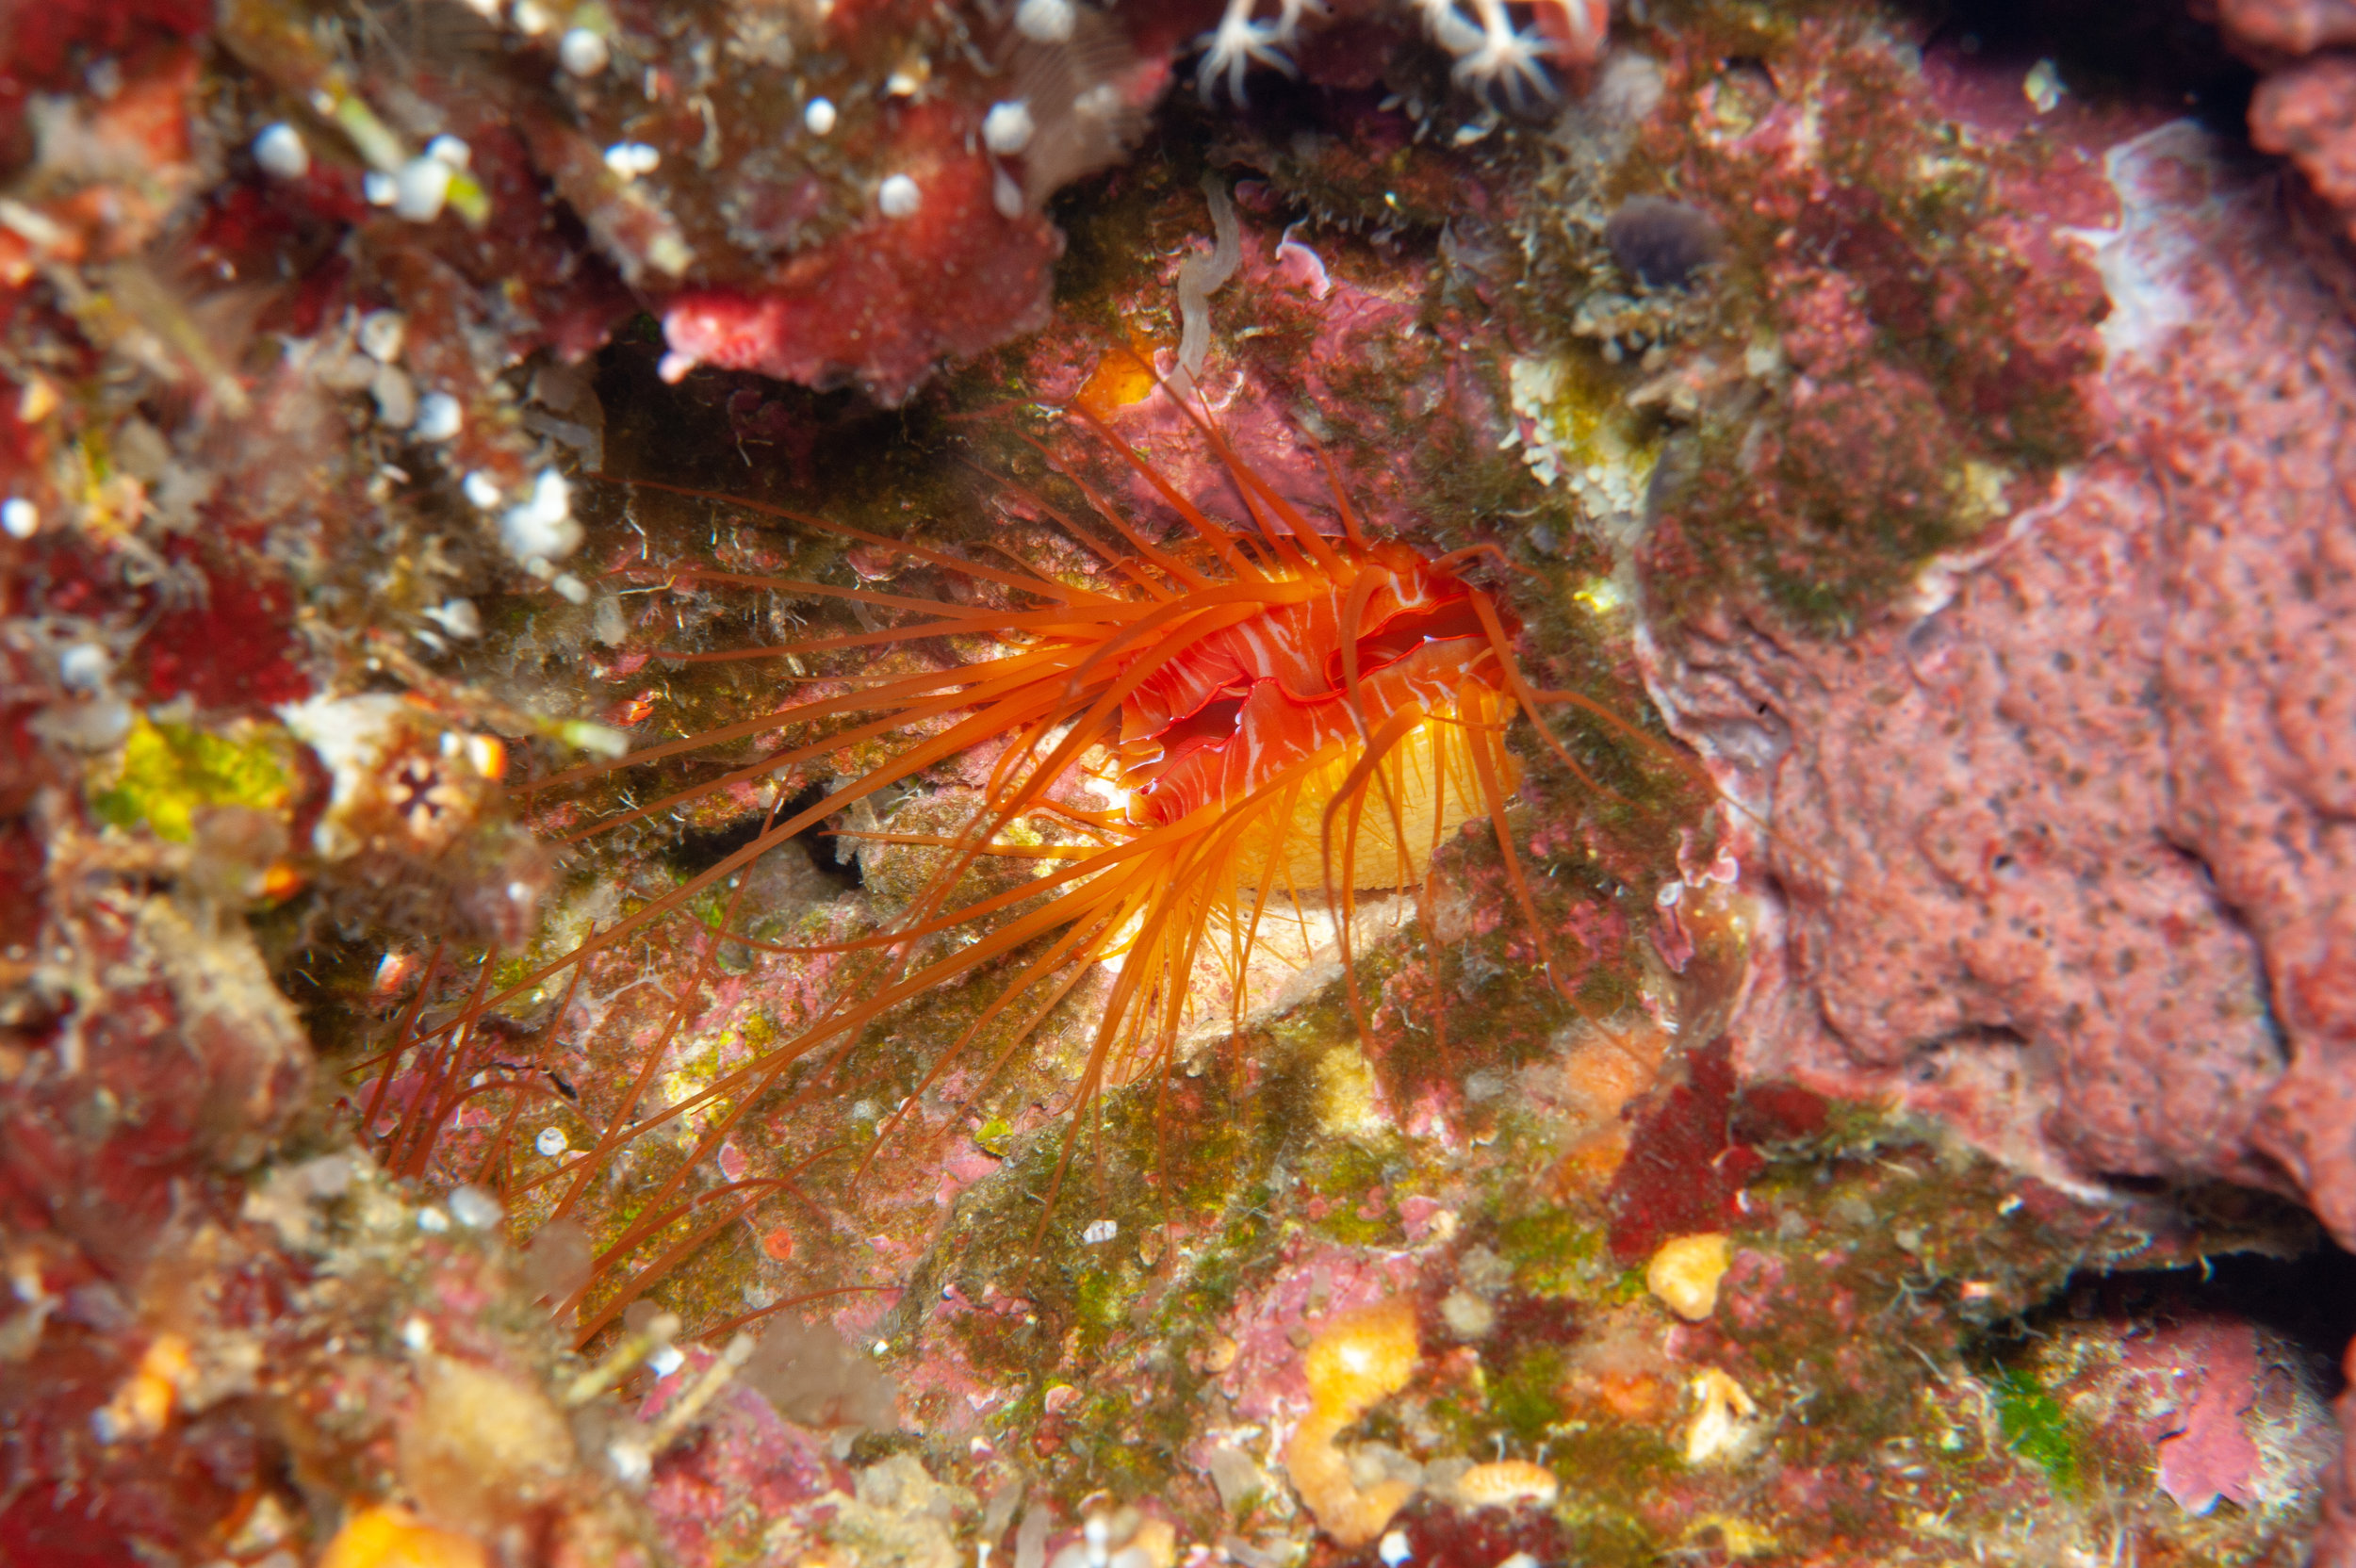 Disco clam - Ctenoides ales, Killibob's Knob, Father's Reefs